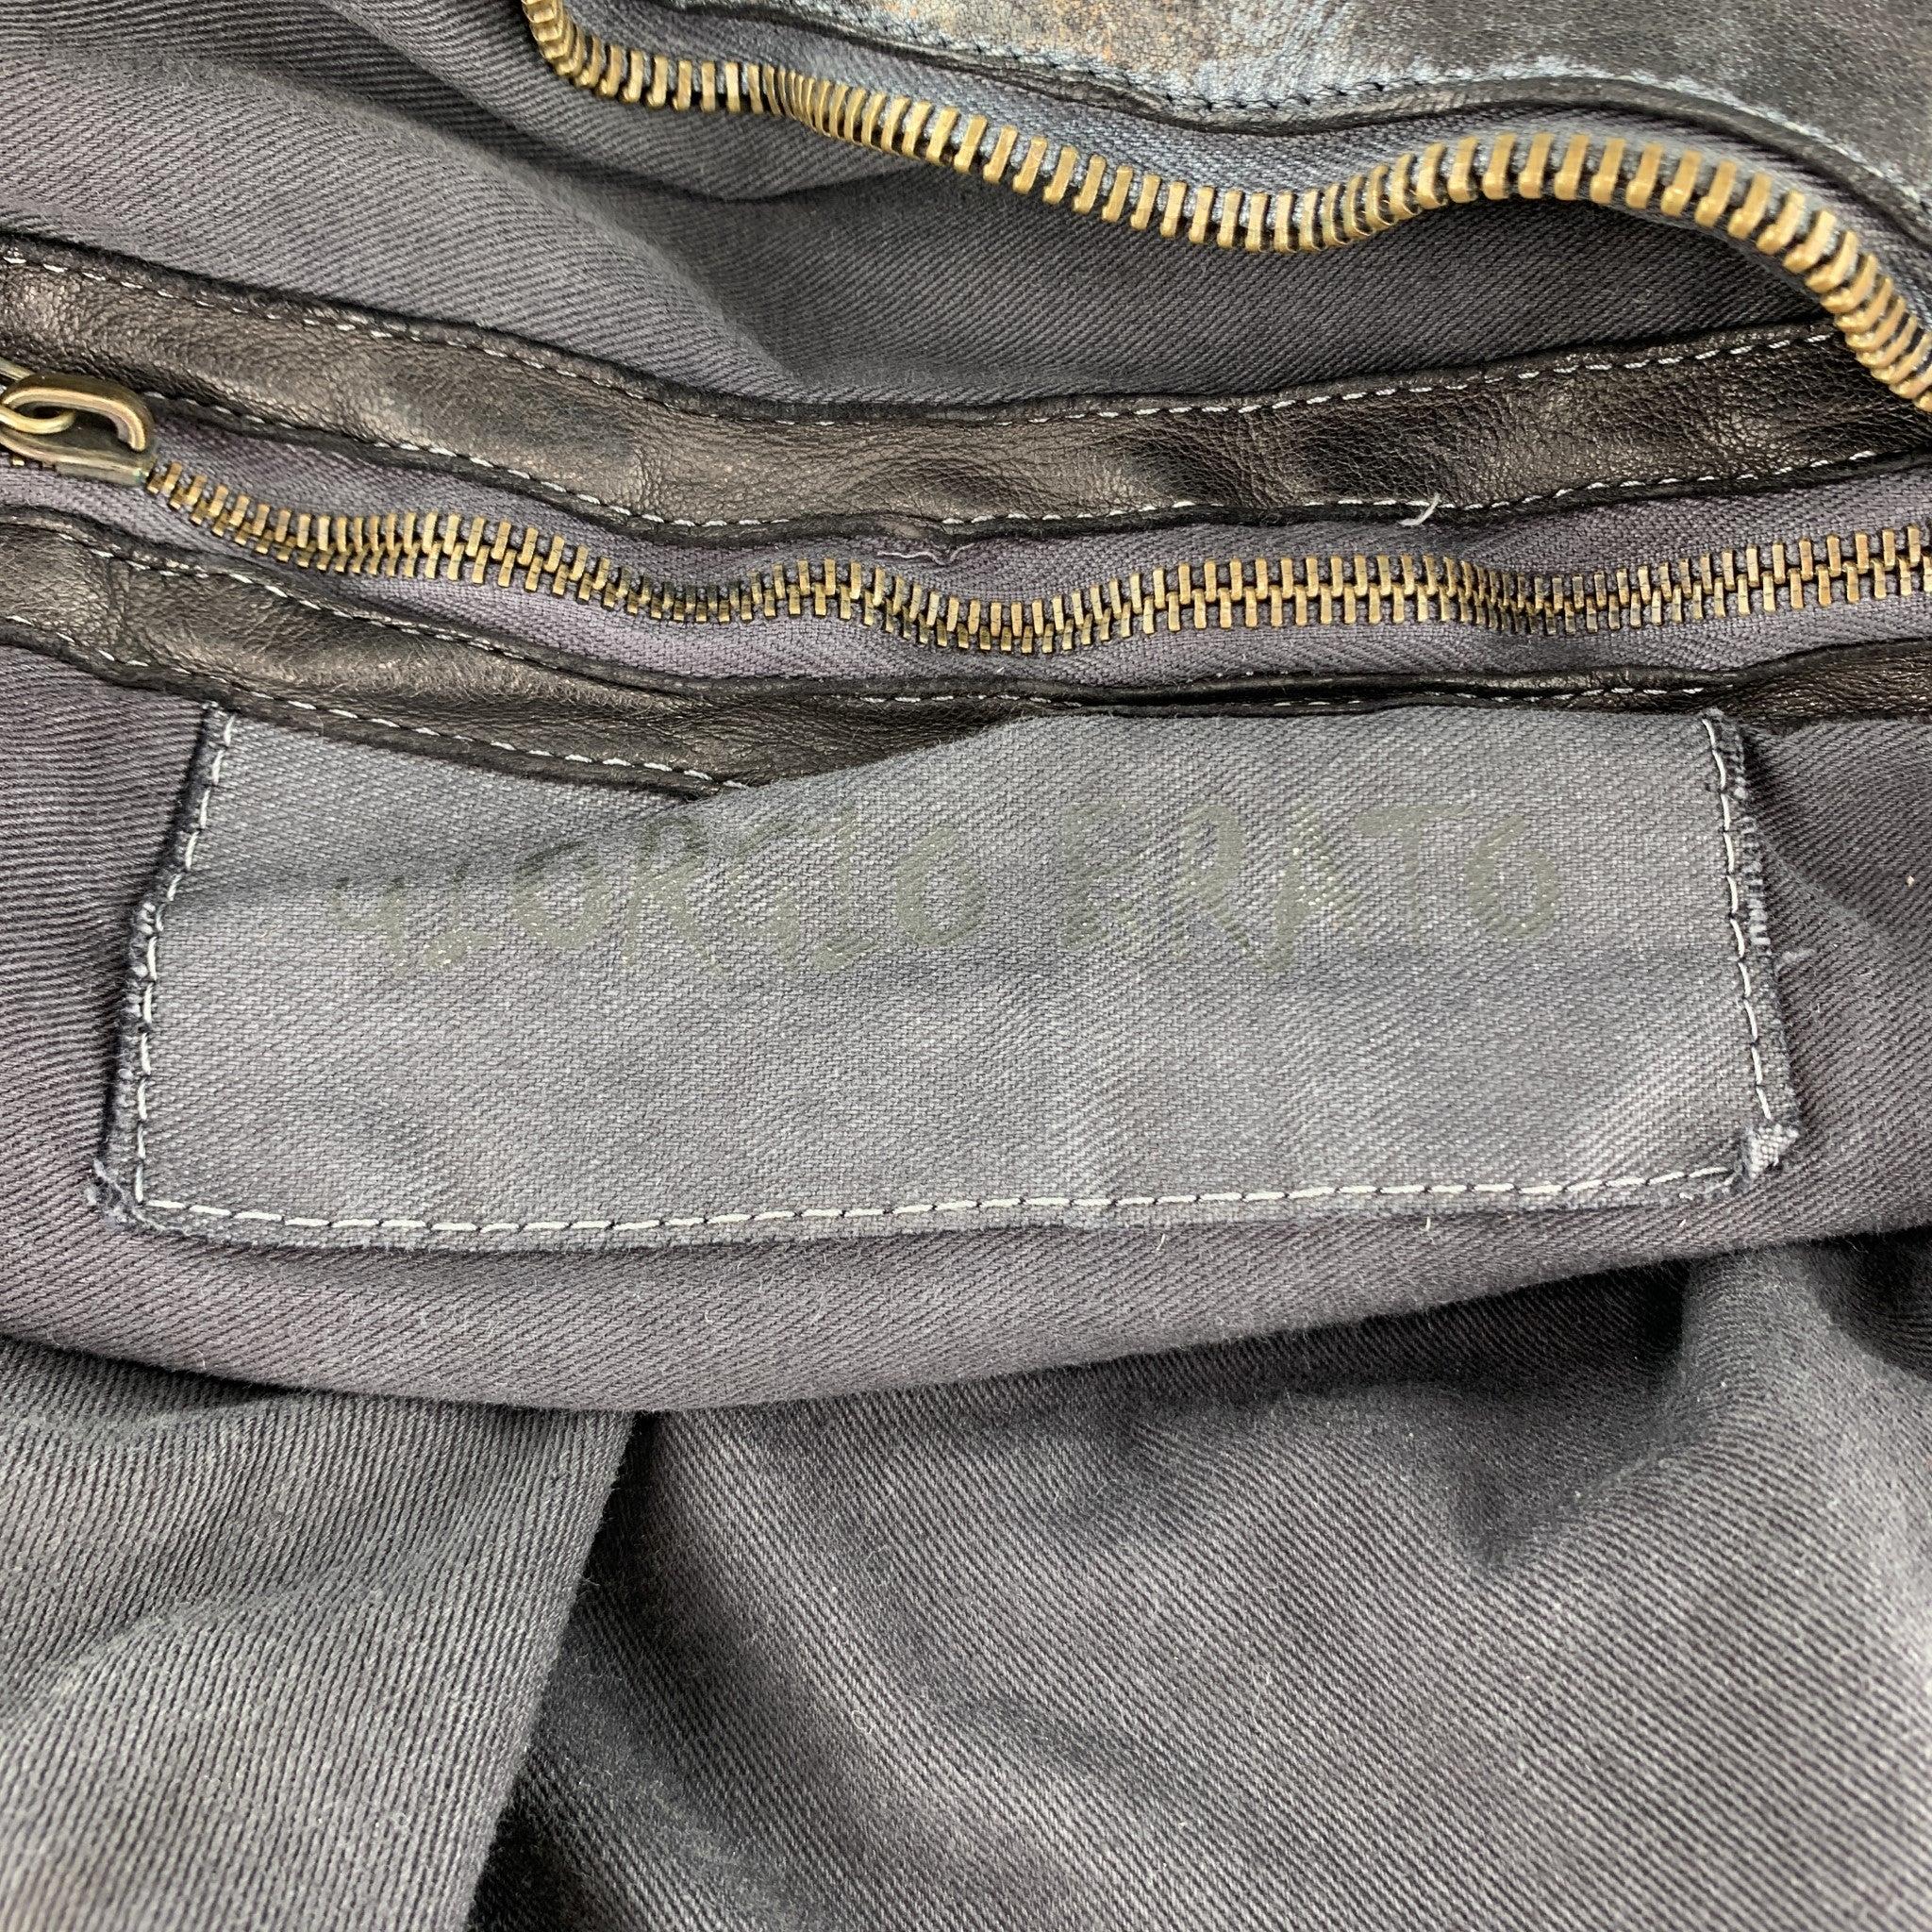 GIORGIO BRATO Distressed Gunmetal Metallic Leather Satchel Handbag For Sale 5